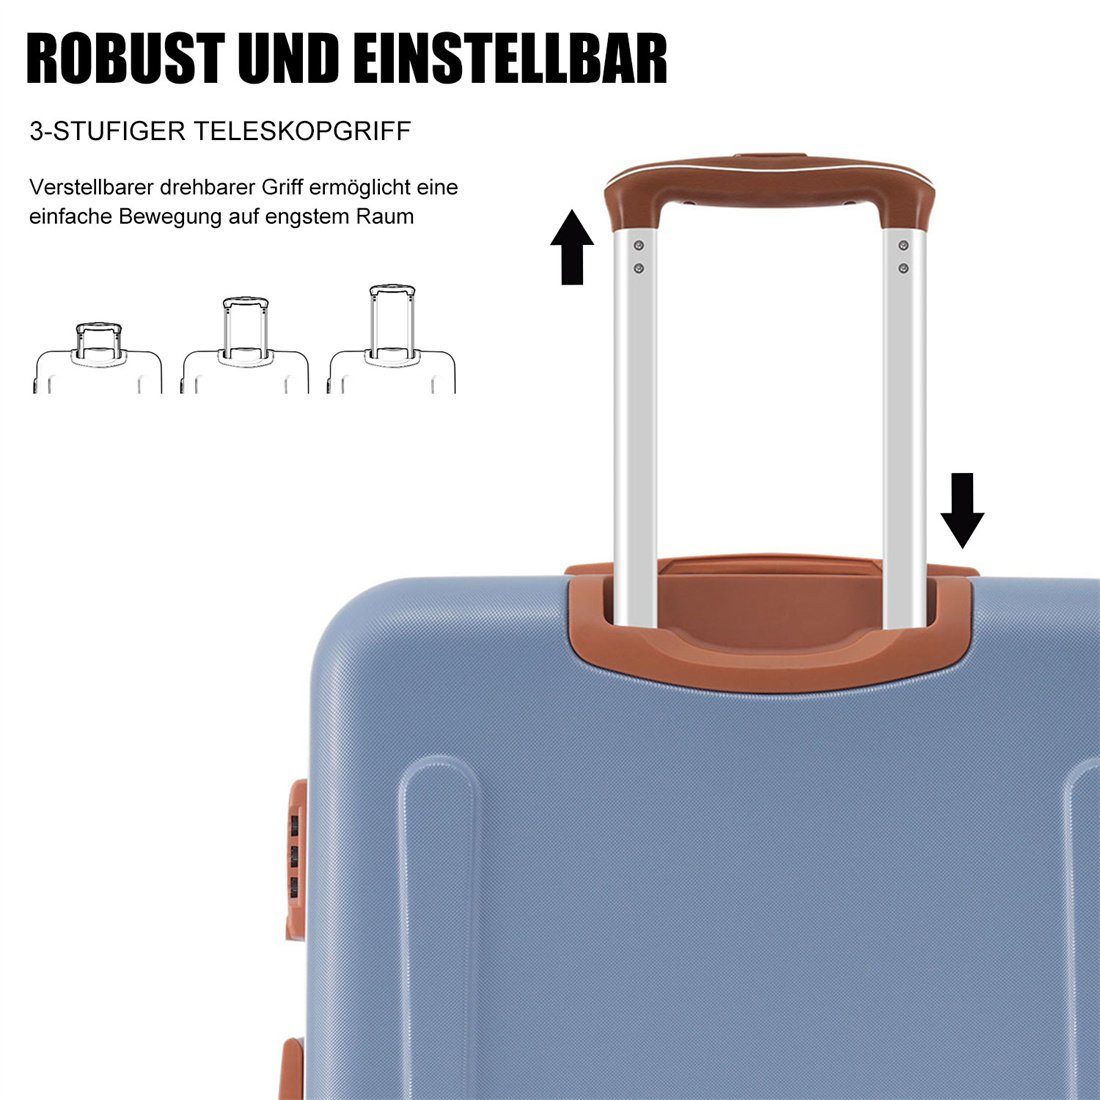 DÖRÖY Koffer Hartschalen-Koffer,Rollkoffer,Reisekoffer,66*44*26.5cm,Dunstblau+braun